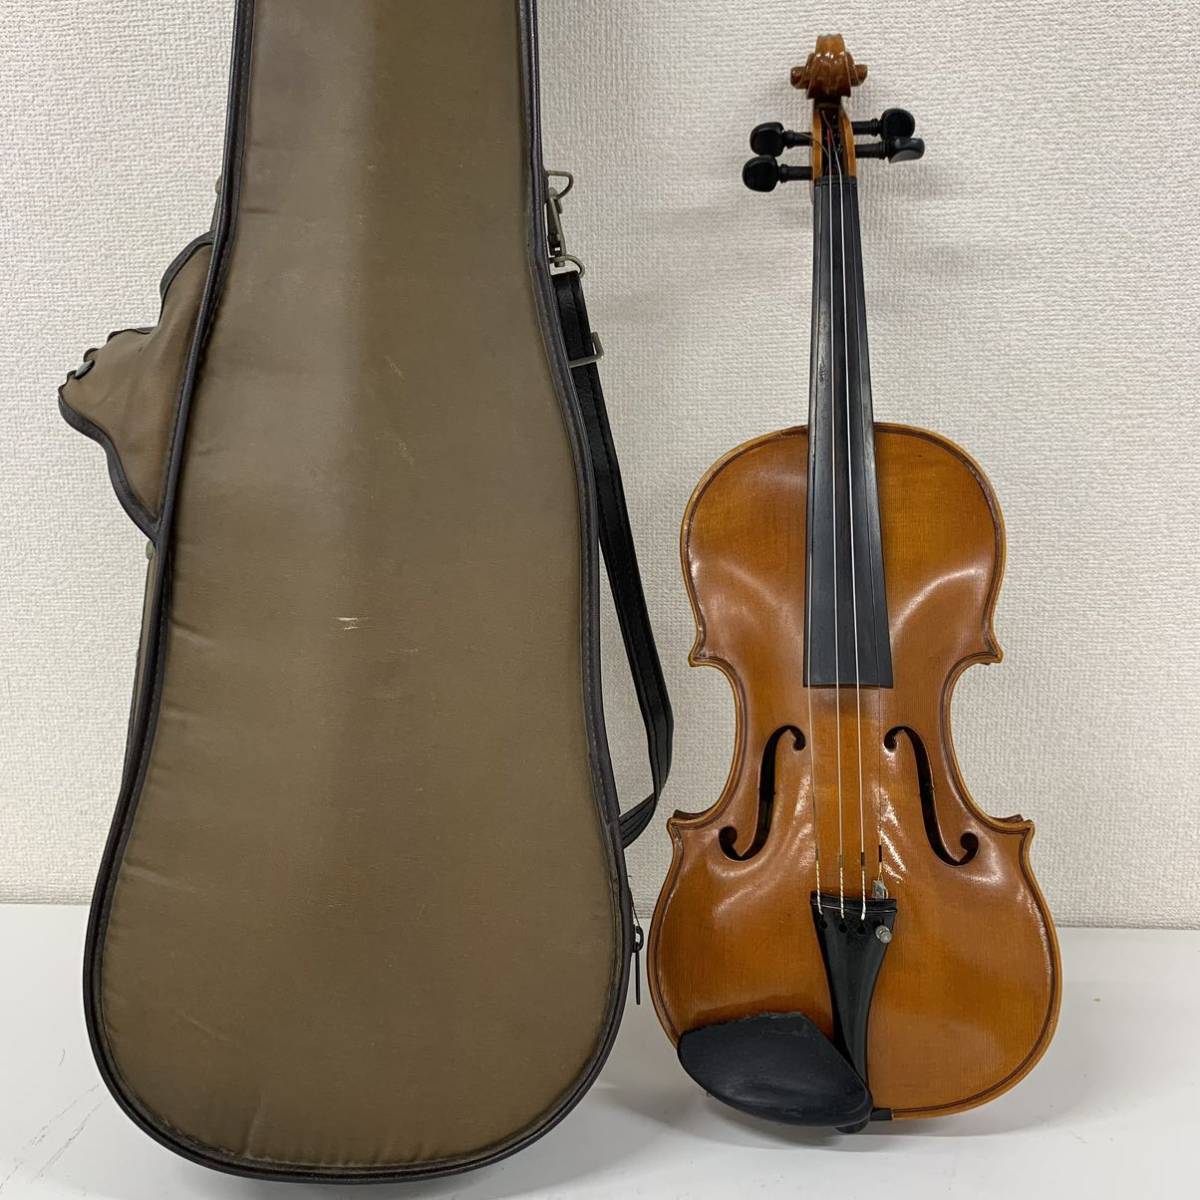 （R2-5-hy）Alexander Christoph 1977年 全長59cm バイオリン ケース付き MADE IN GDR 東ドイツ時代? 弦楽器 BST47